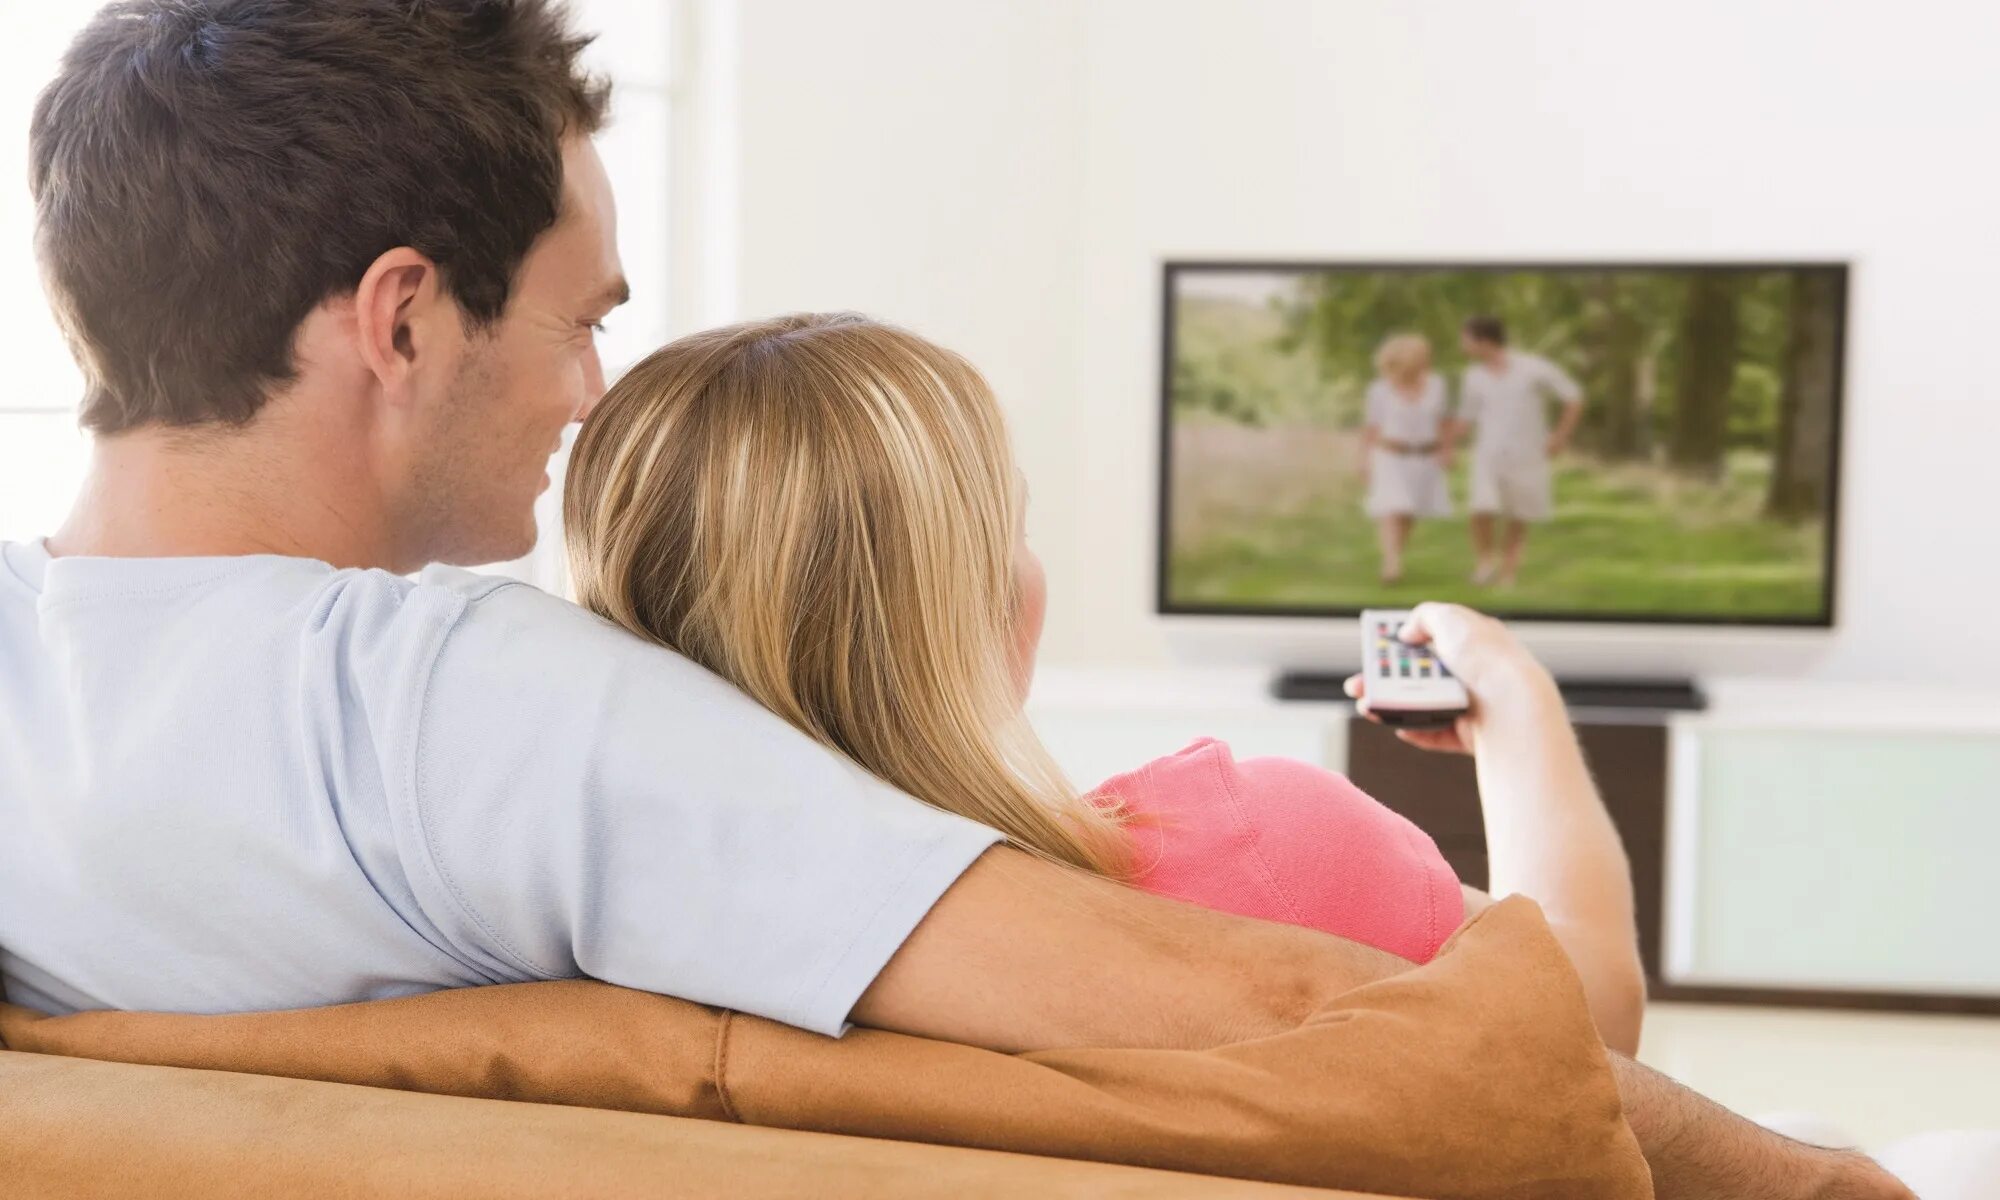 Вместе смотрят телевизор. Человек телевизор. Человек перед телевизором. Пара перед телевизором. Пара на диване перед телевизором.